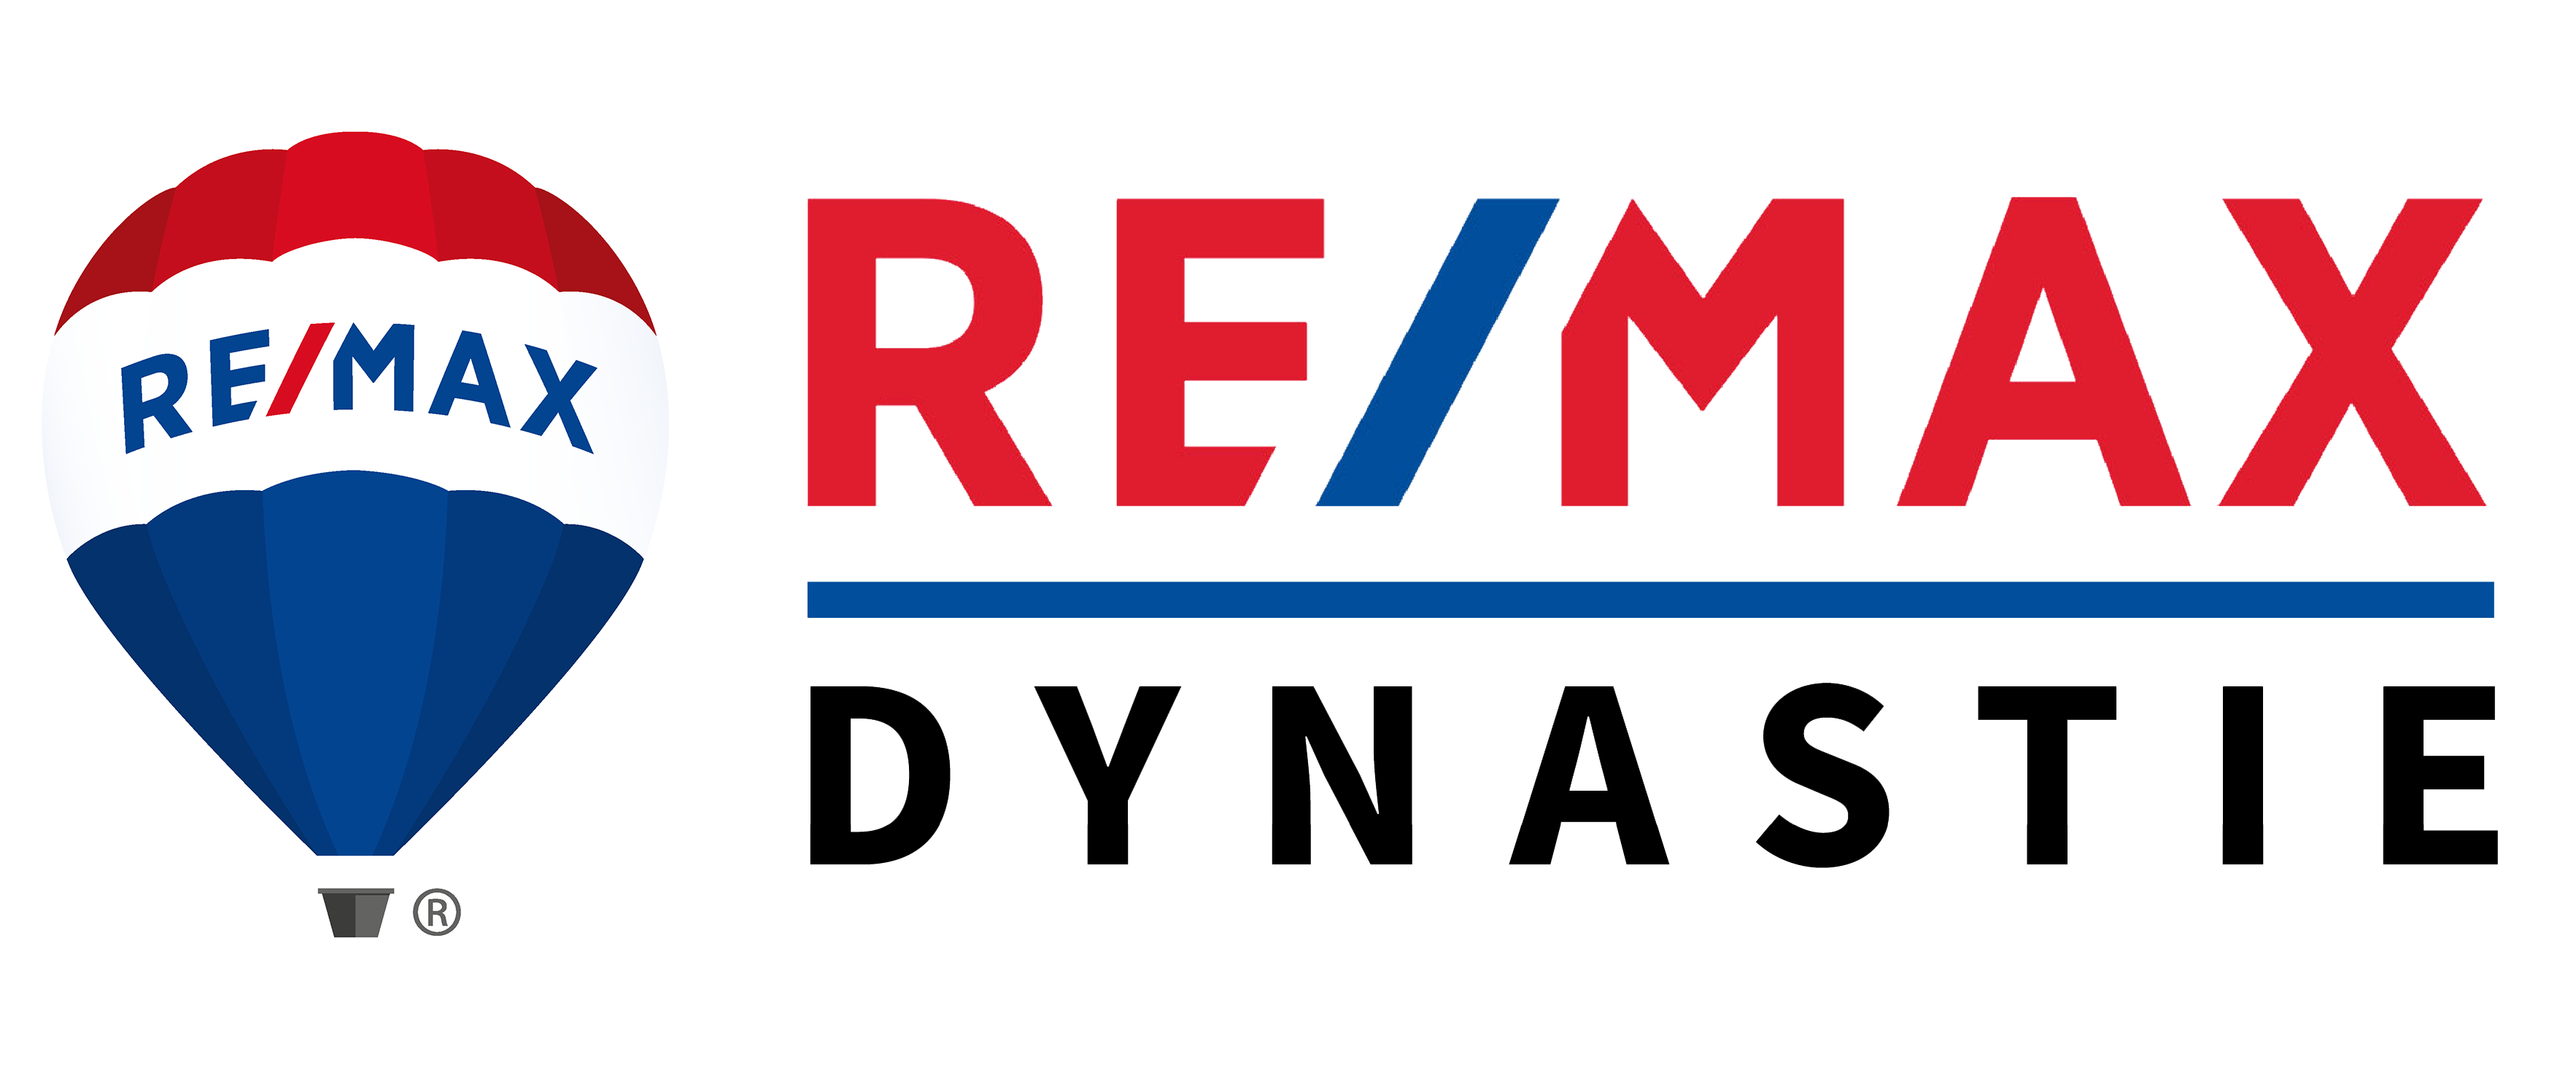 Remax dynastie